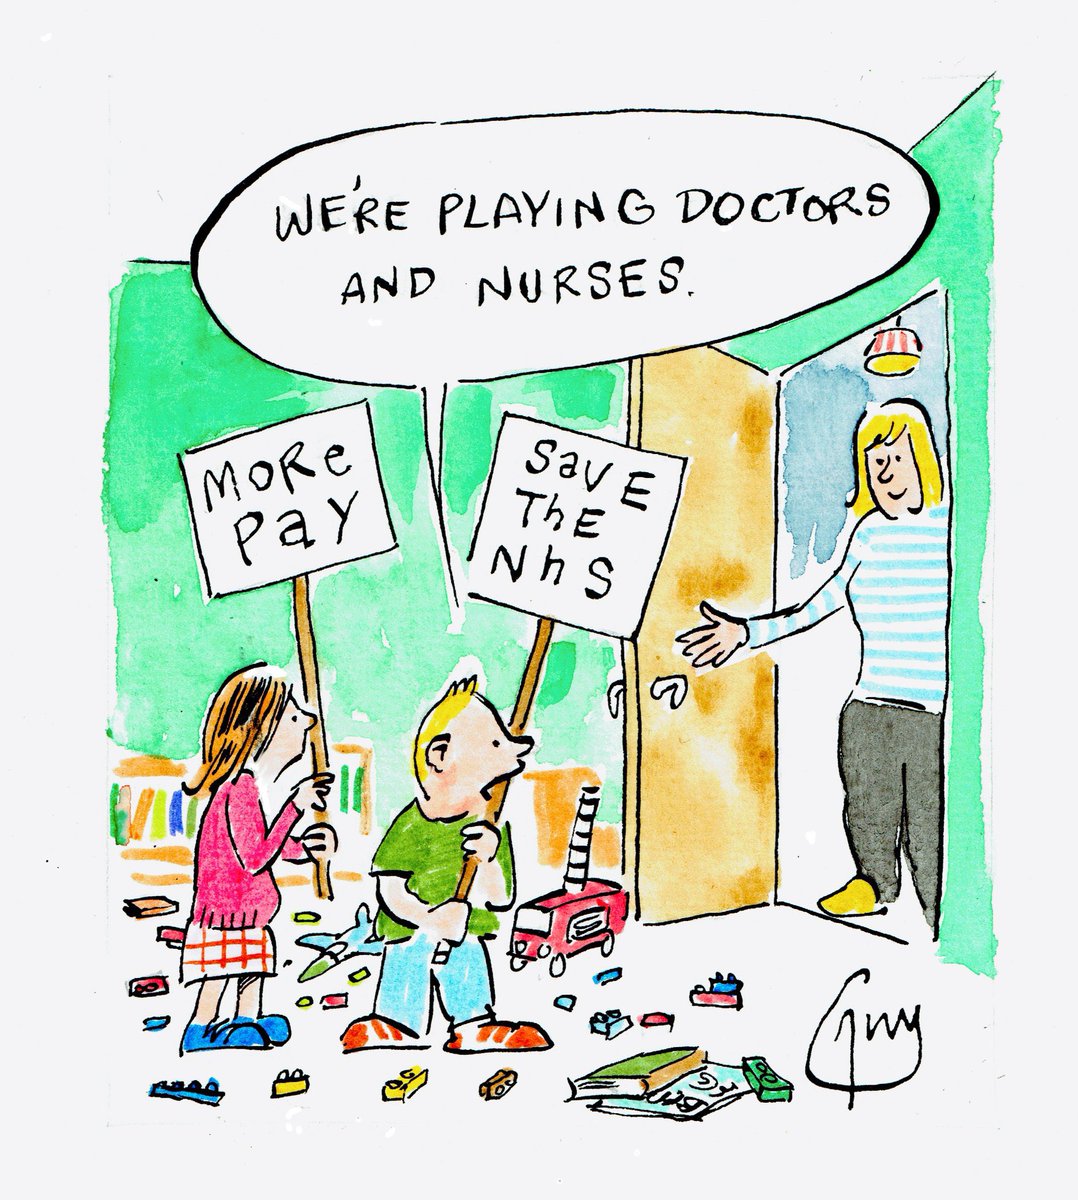 Guy Venables on #doctorslivesmatter #NursesStrike #doctorstrike - political cartoon gallery in London original-political-cartoon.com